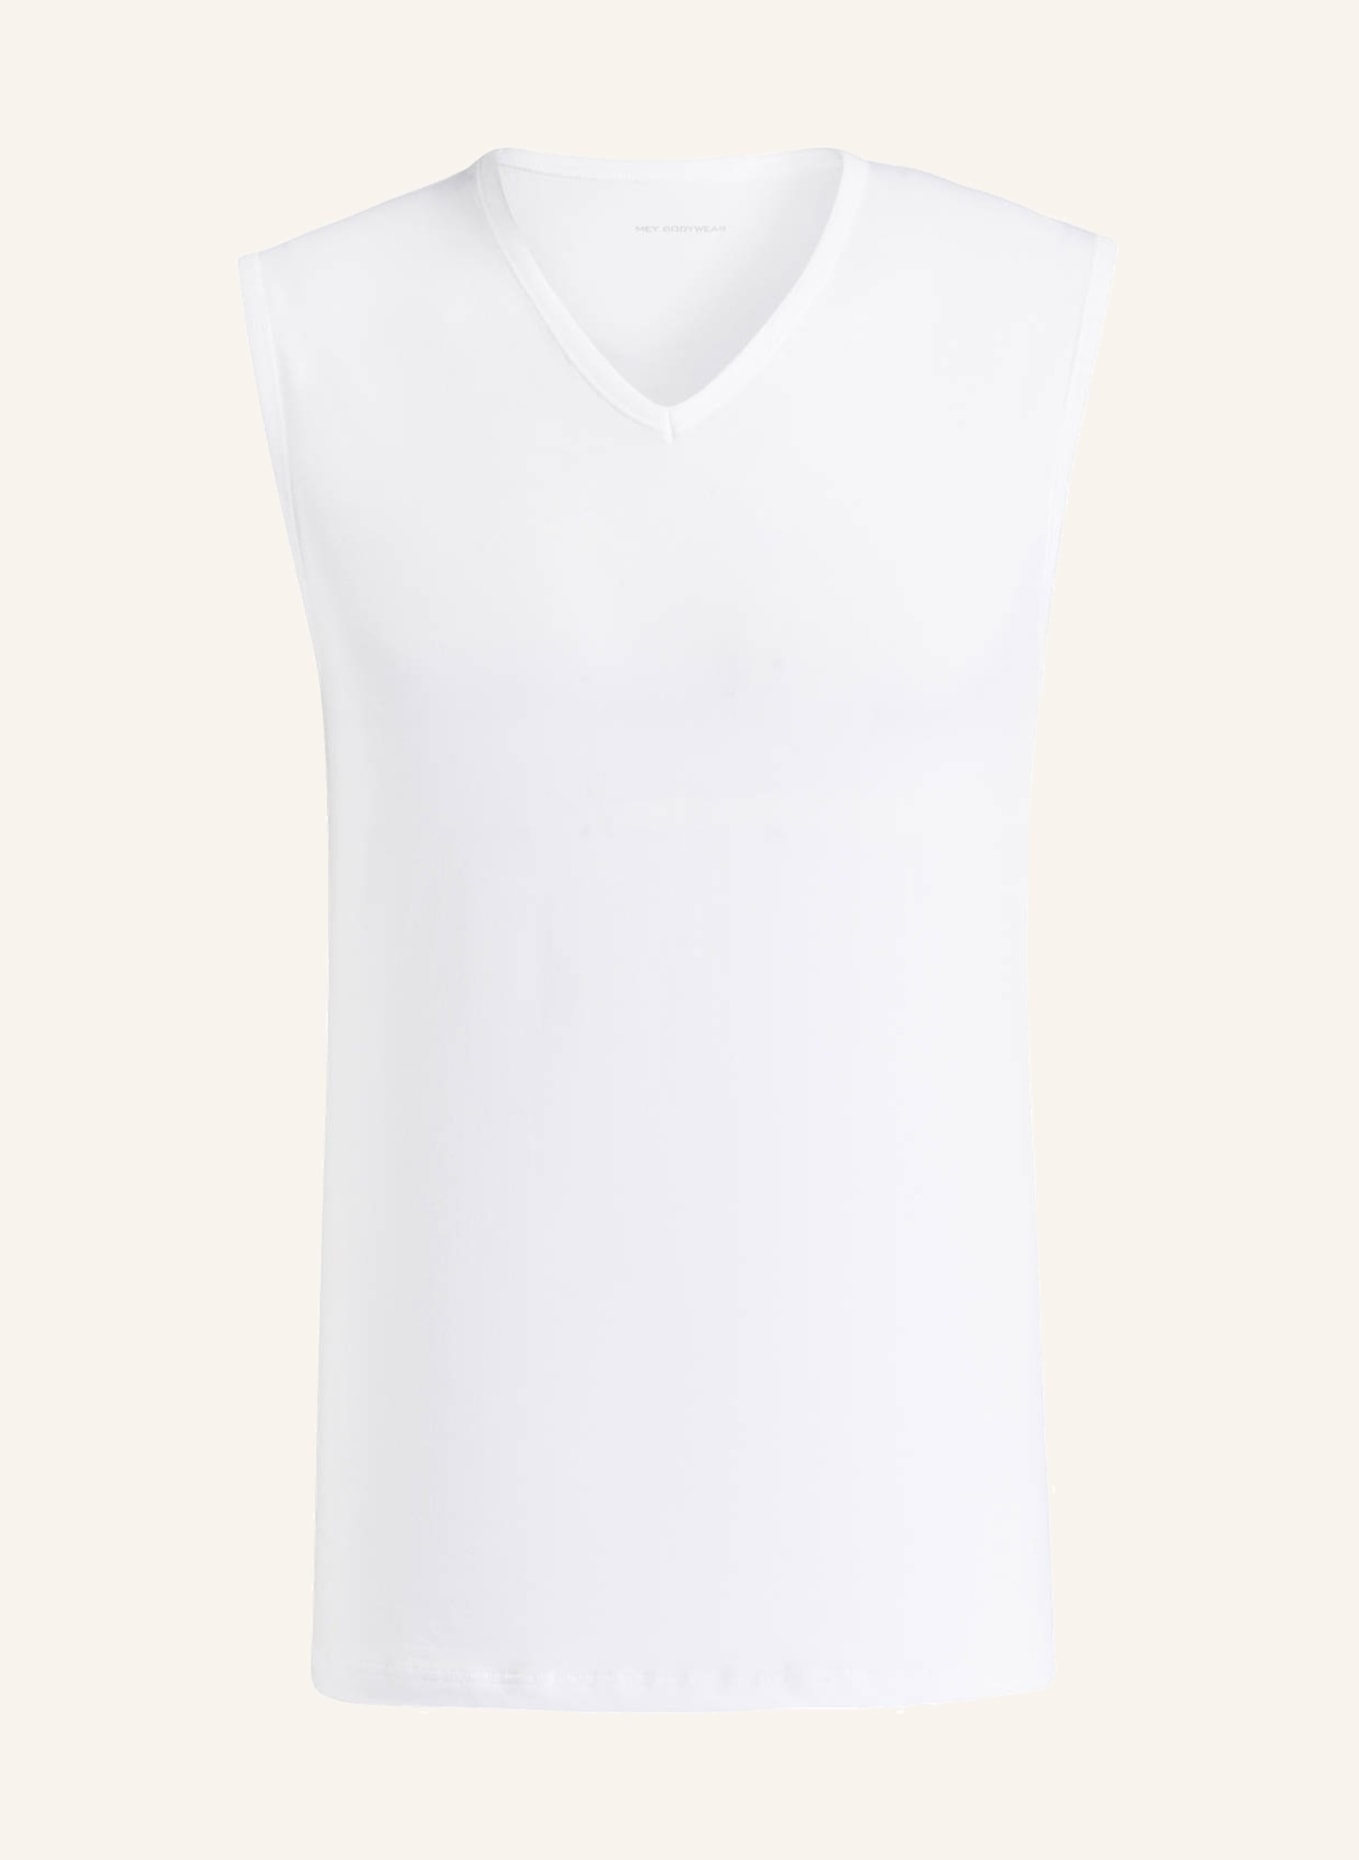 mey V-neck shirt series DRY COTTON, Color: WHITE (Image 1)